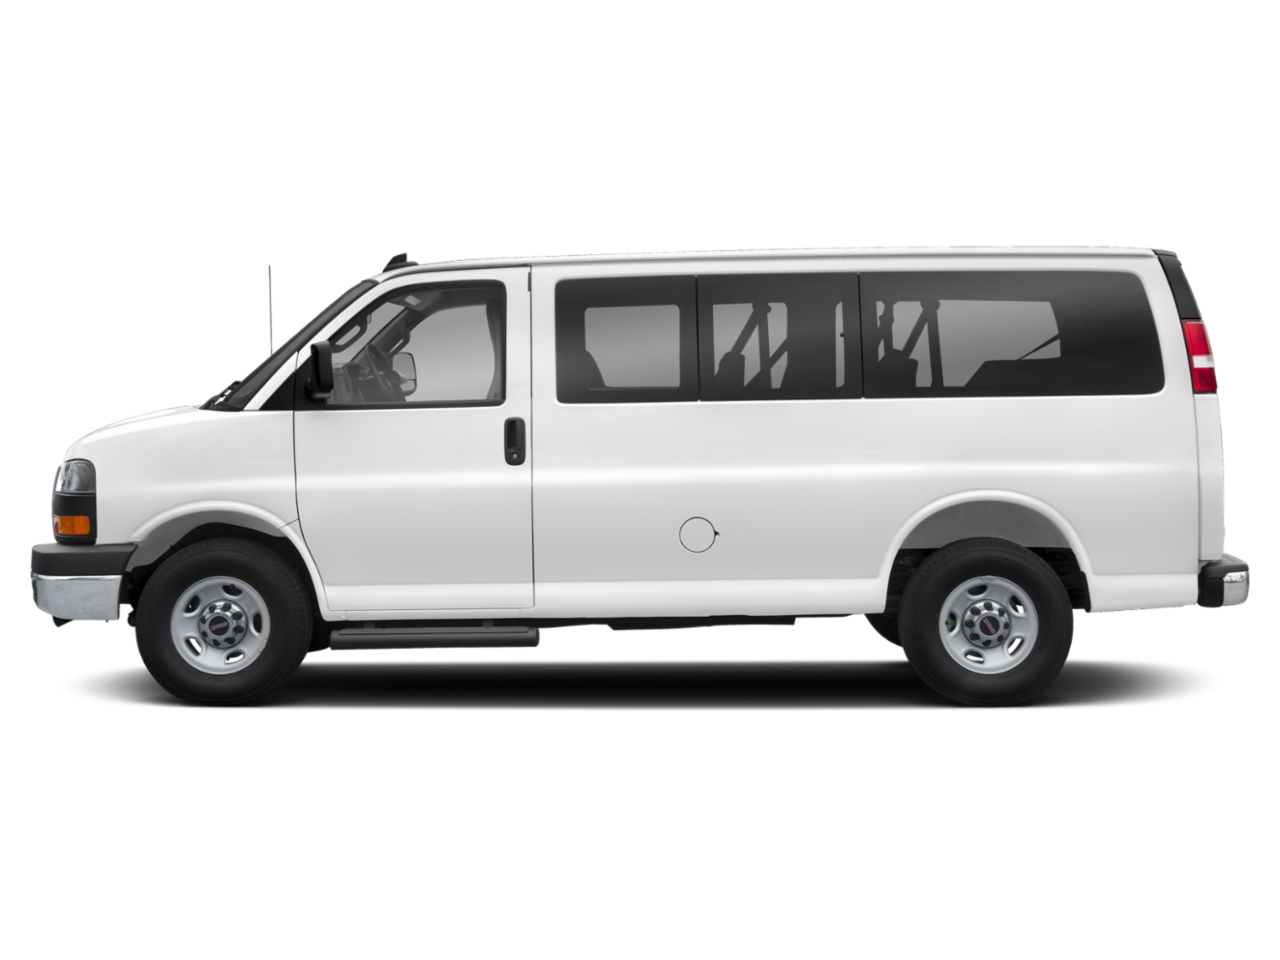 2020 gmc savana extended passenger van